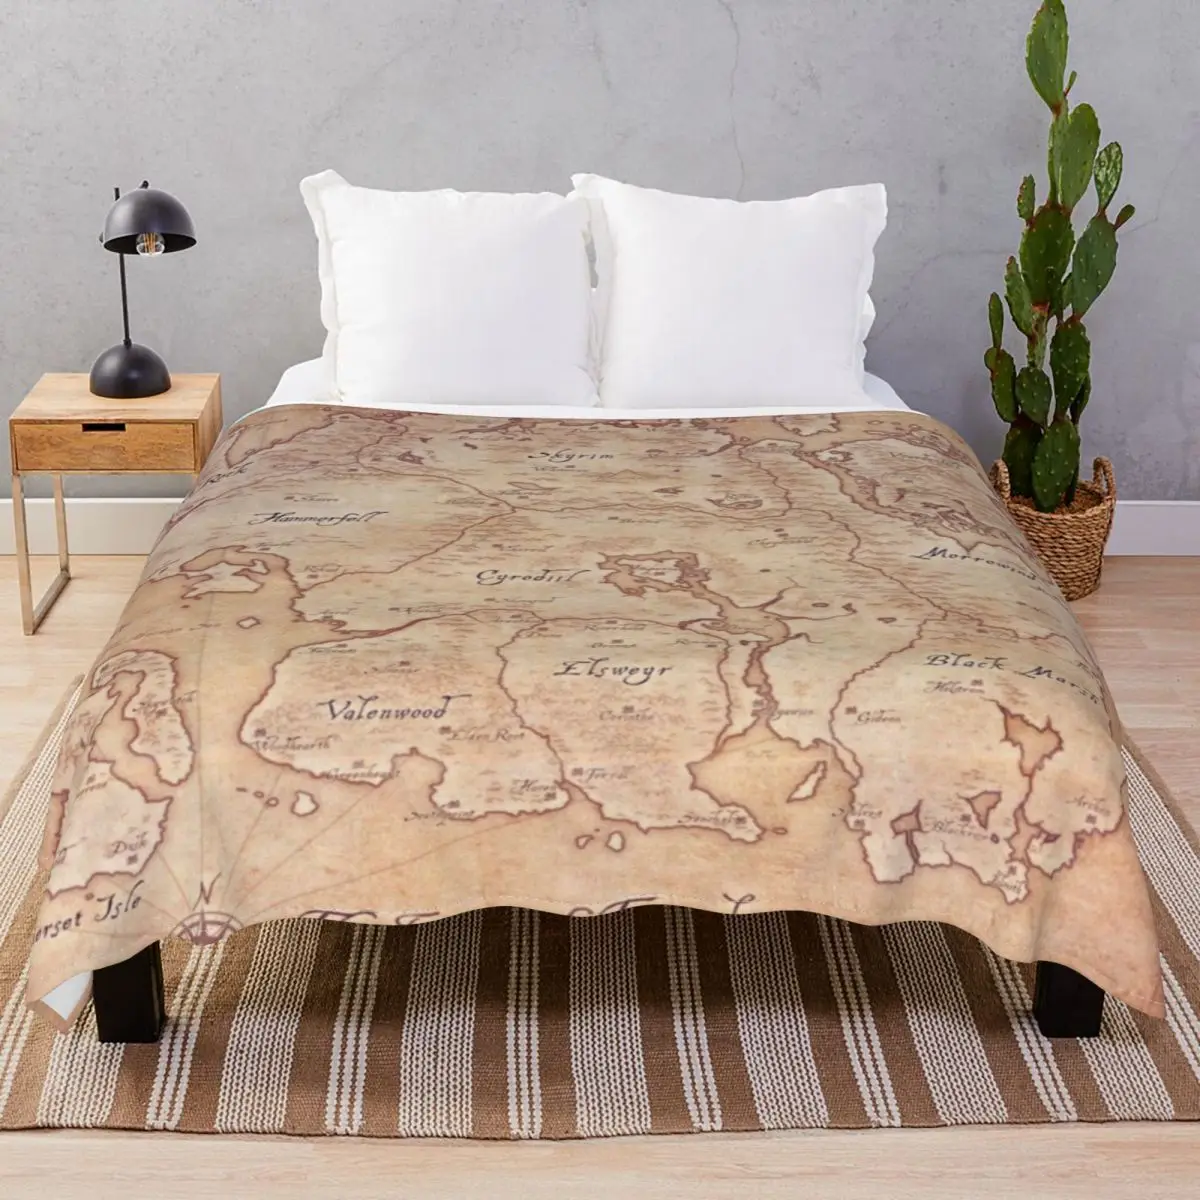 Tamriel Blanket Fleece Print Warm Unisex Throw Blankets for Bed Sofa Travel Office